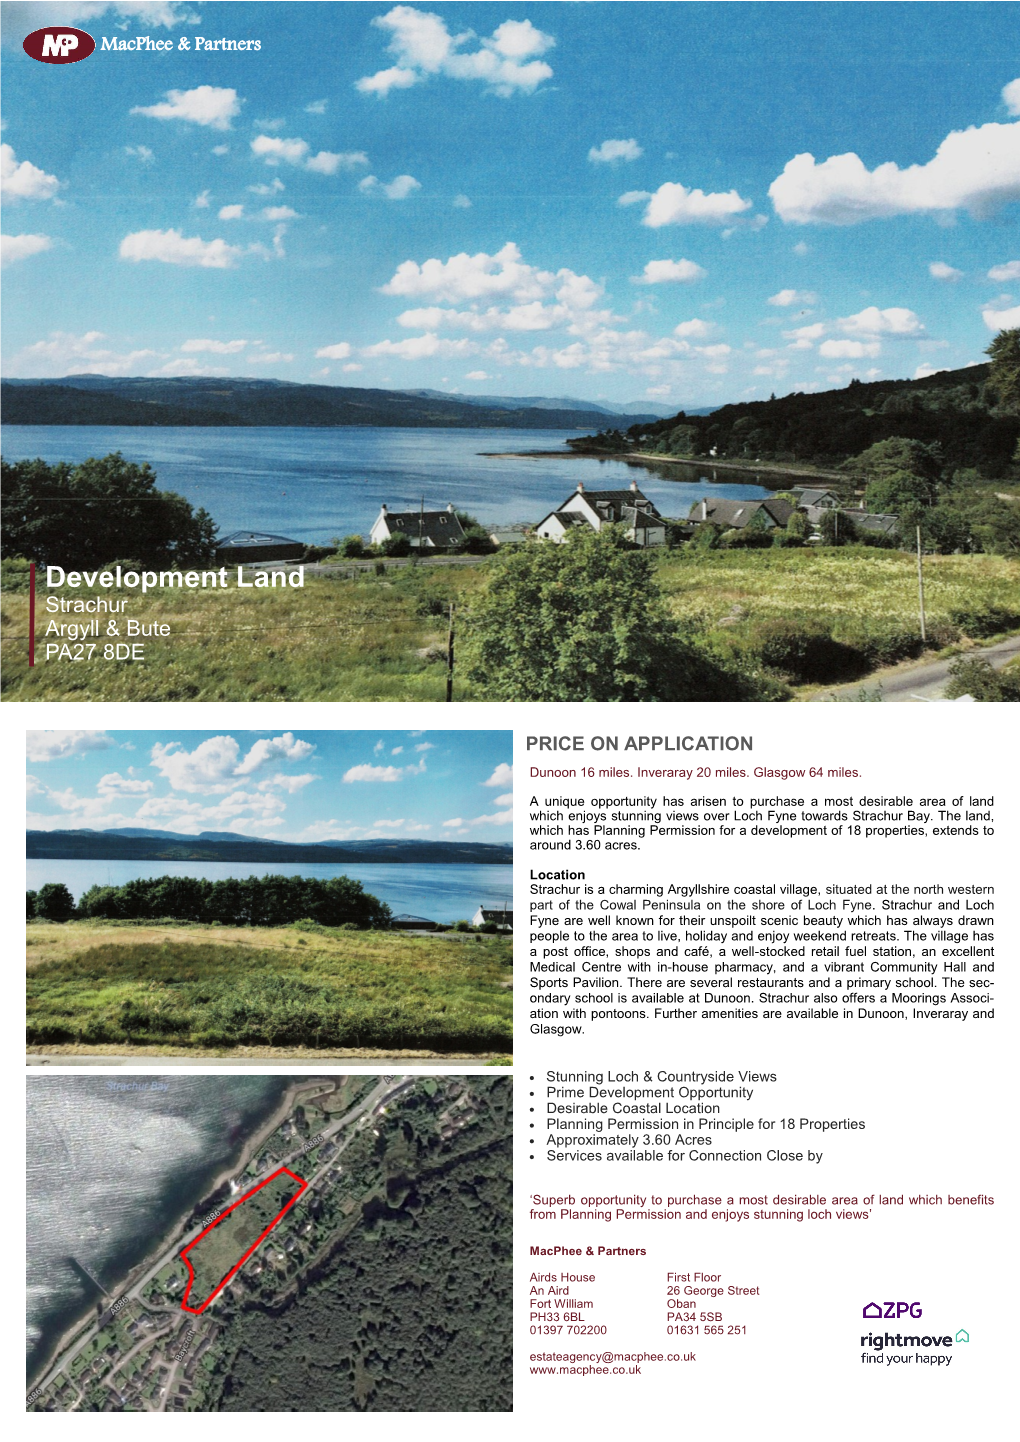 Development Land Strachur Argyll & Bute PA27 8DE